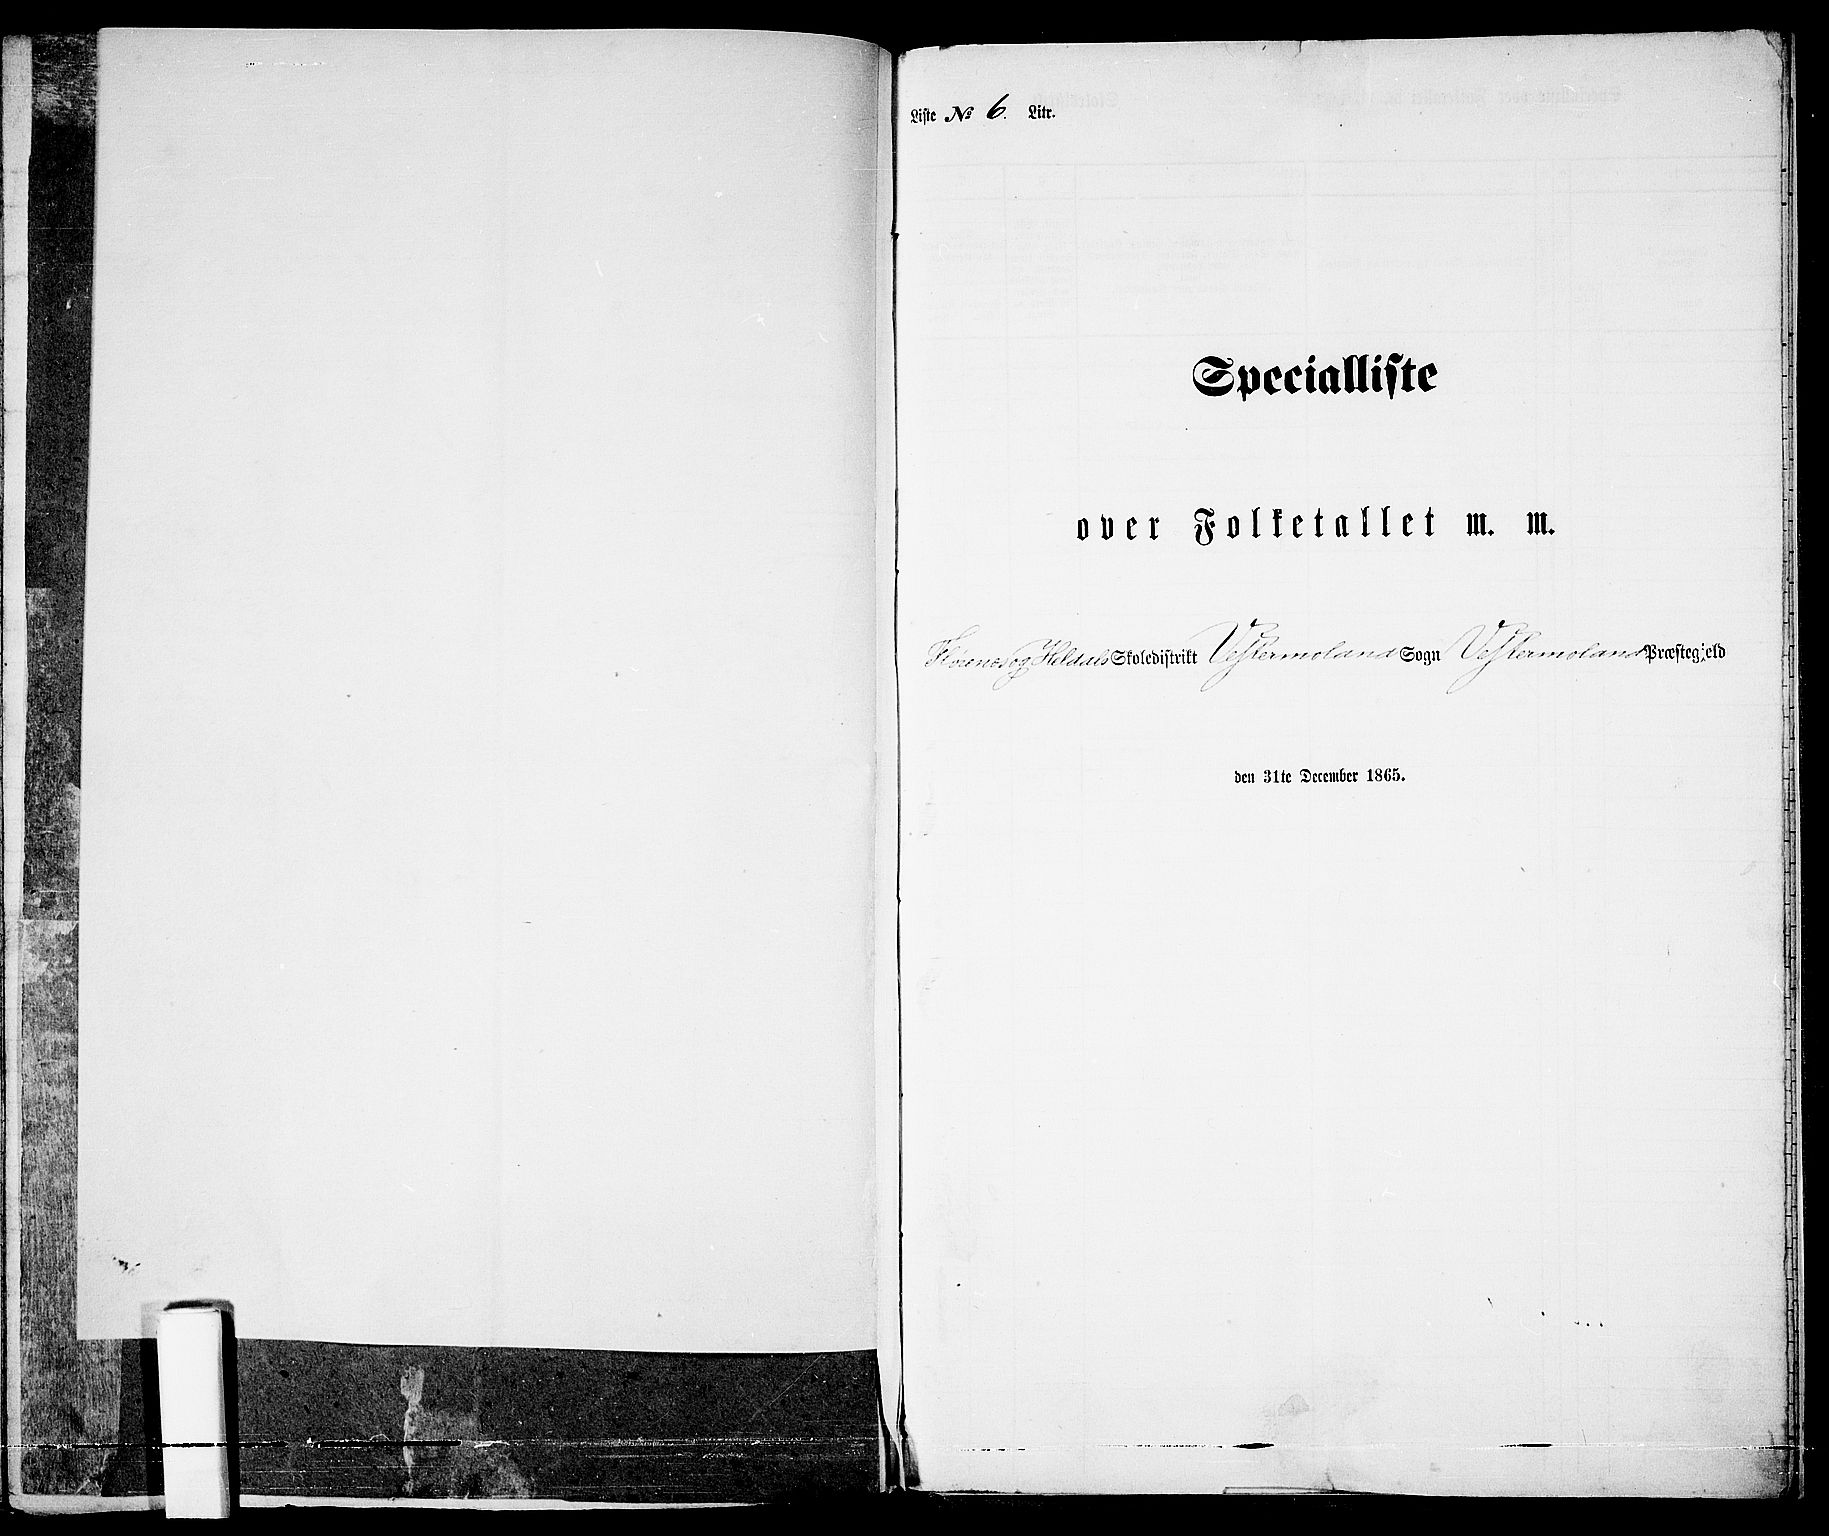 RA, Folketelling 1865 for 0926L Vestre Moland prestegjeld, Vestre Moland sokn, 1865, s. 80